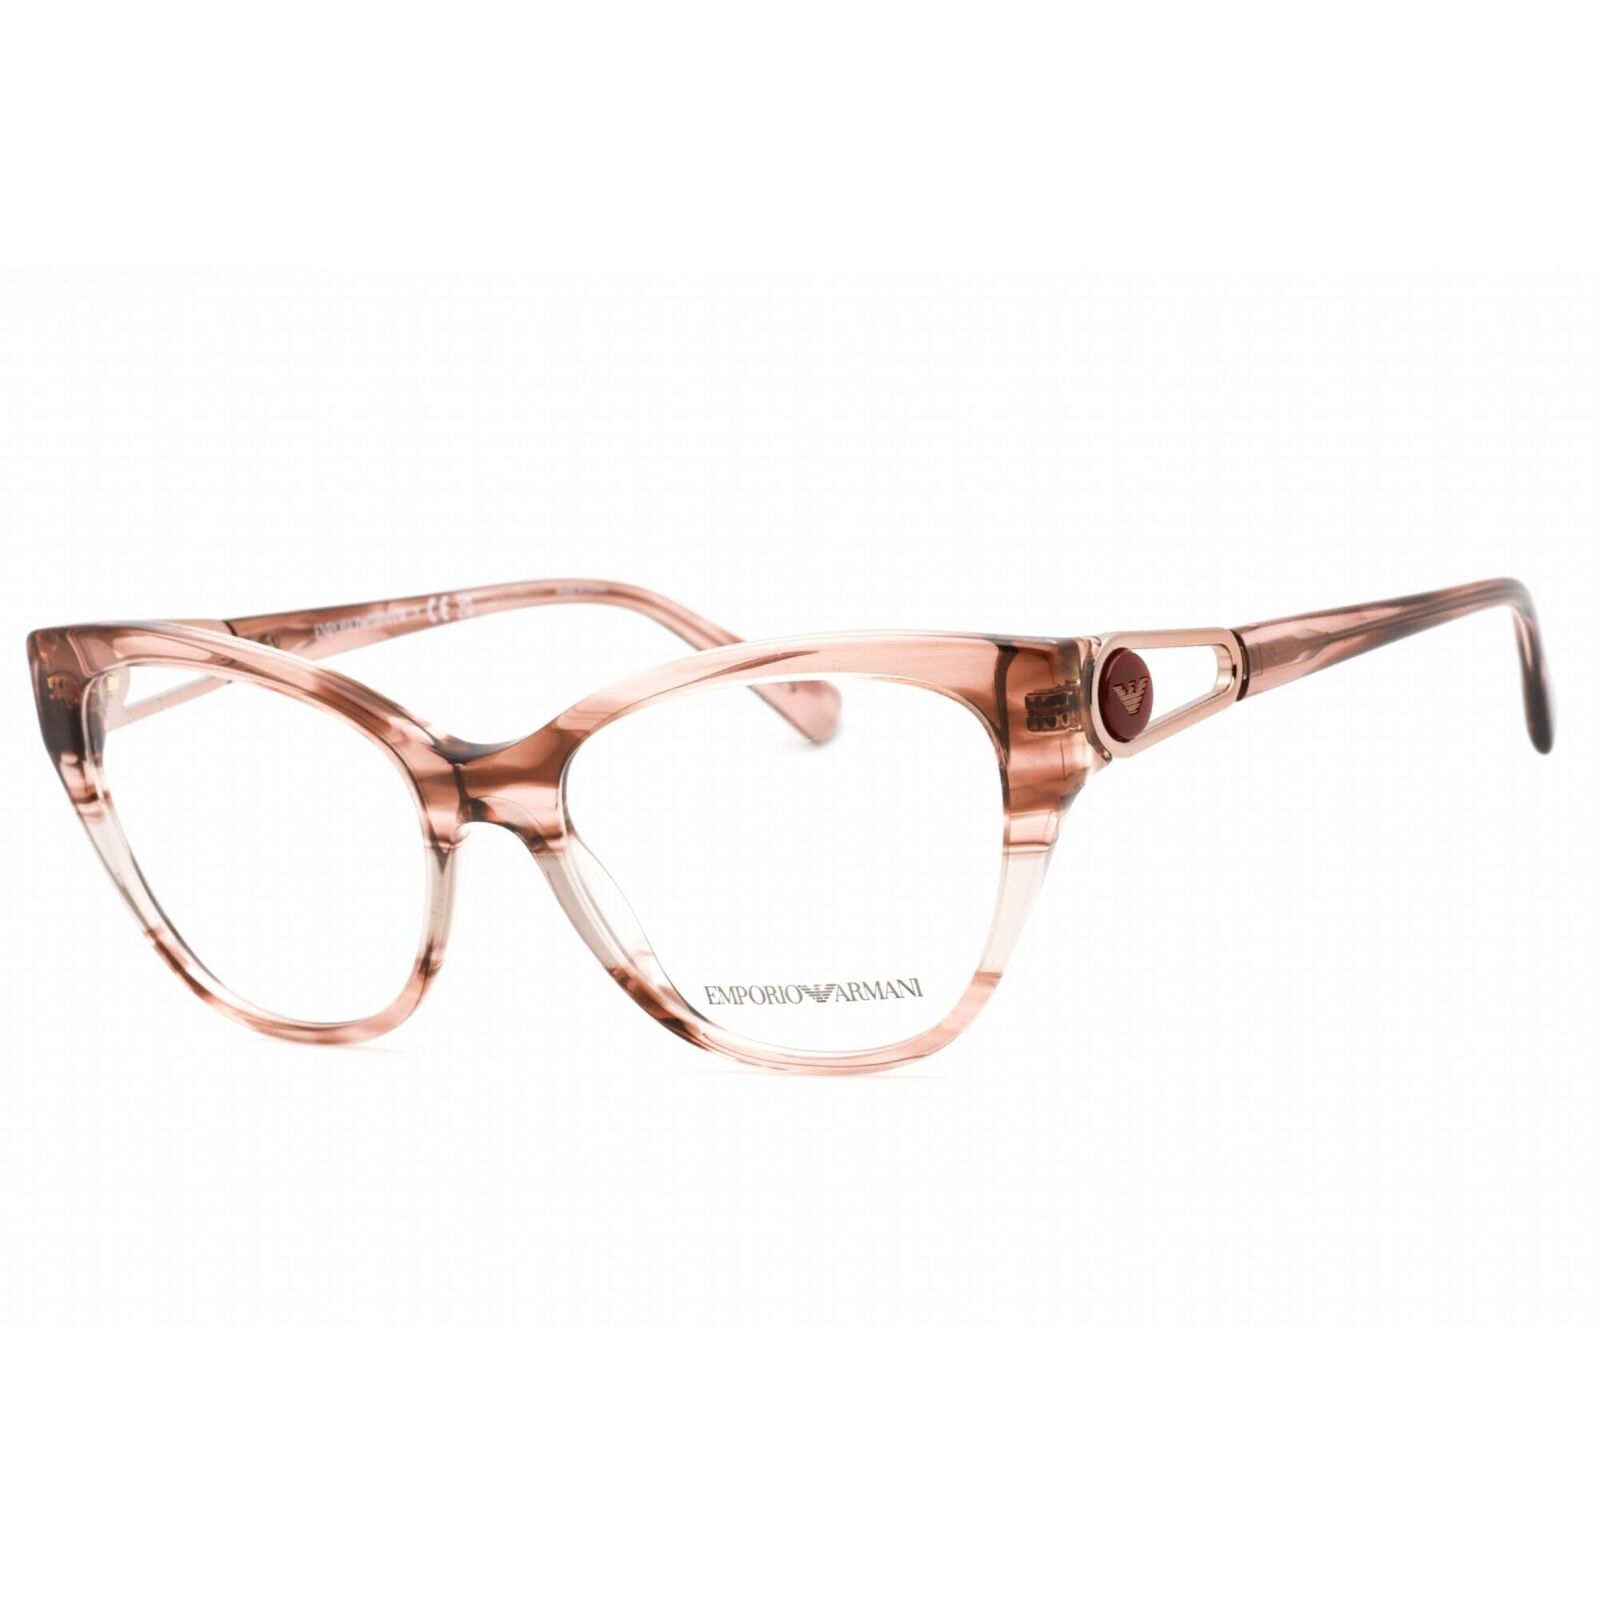 Emporio Armani Women's Eyeglasses Shiny Striped Pink Full Rim Frame 0EA3212 5021 Emporio Armani 0EA3212 5021